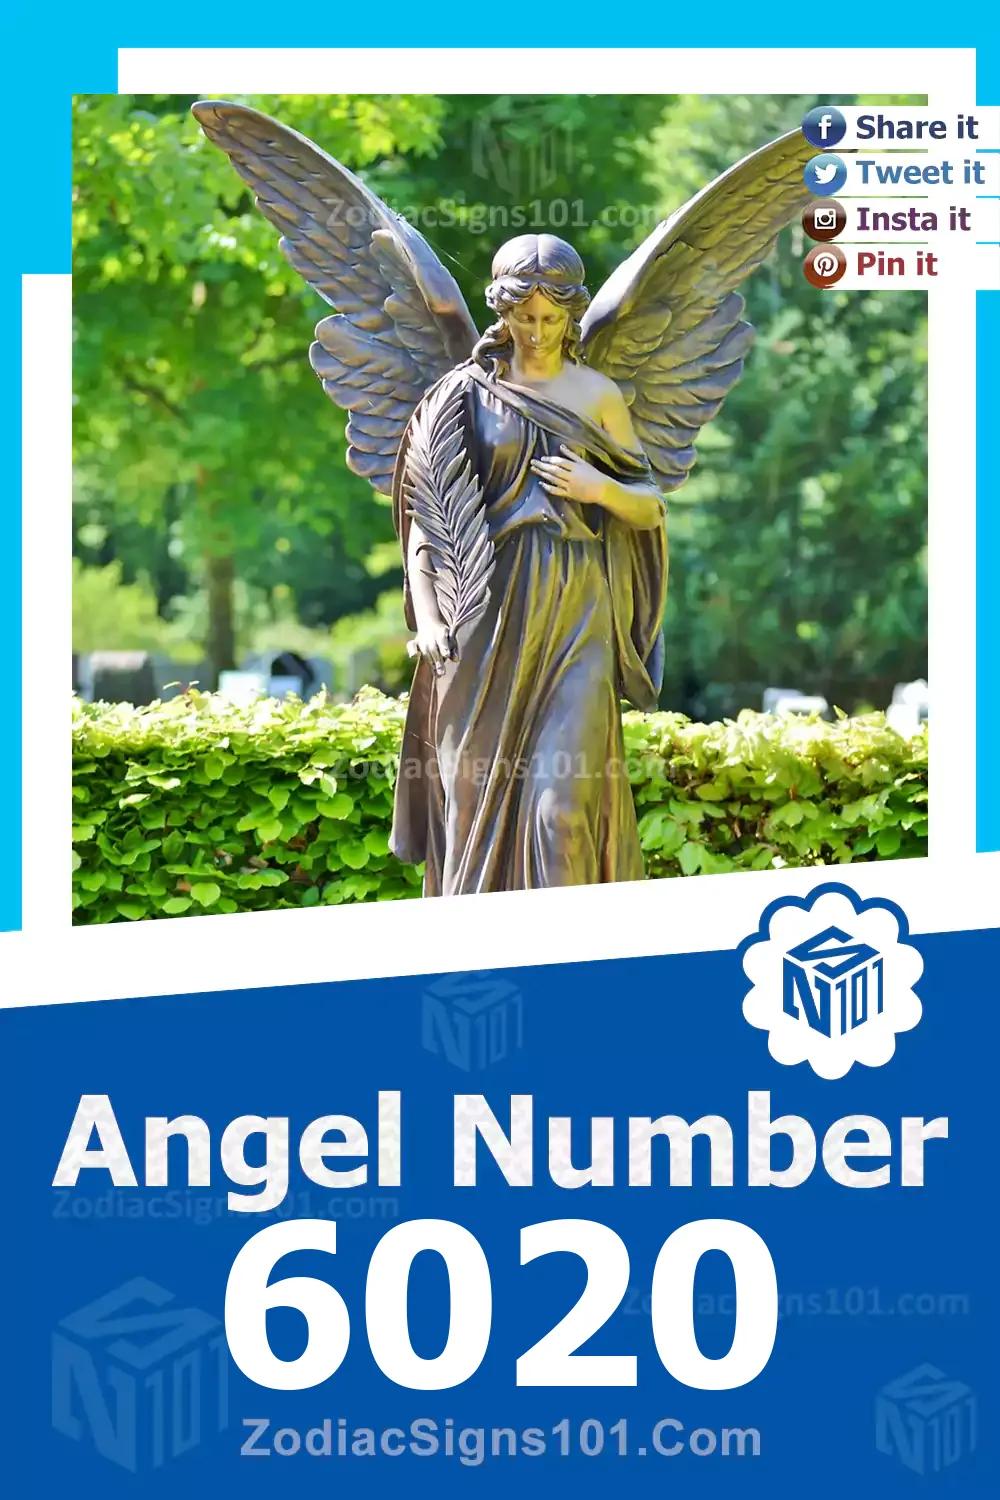 6020-Angel-Number-Meaning.jpg